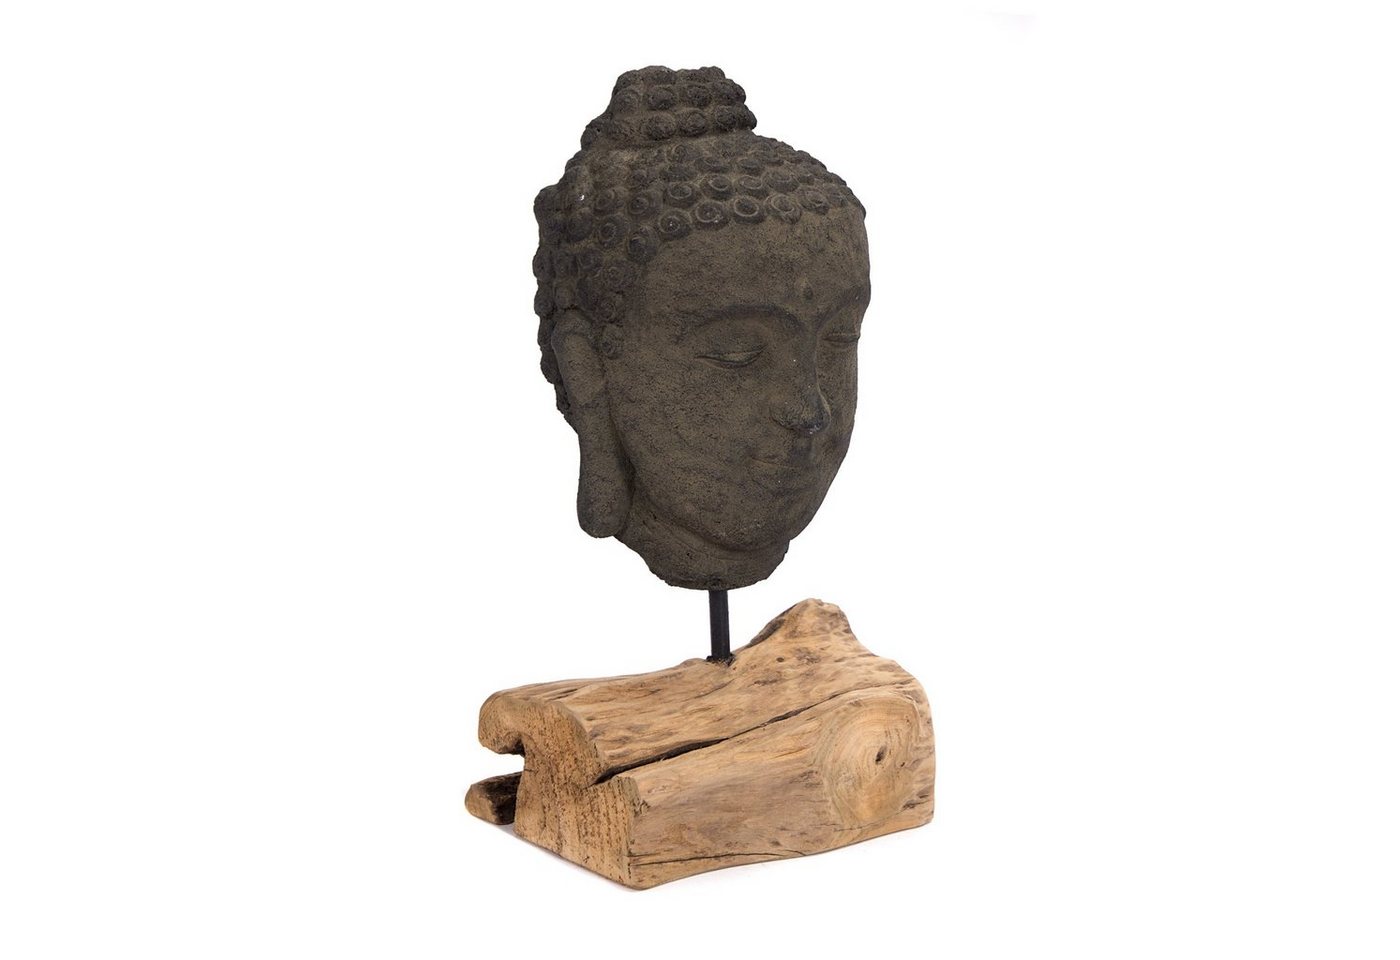 CREEDWOOD Skulptur SKULPTUR BUDDHA", 45 cm, Beton, Buddha-Kopf, Buddha Deko Objekt" von CREEDWOOD